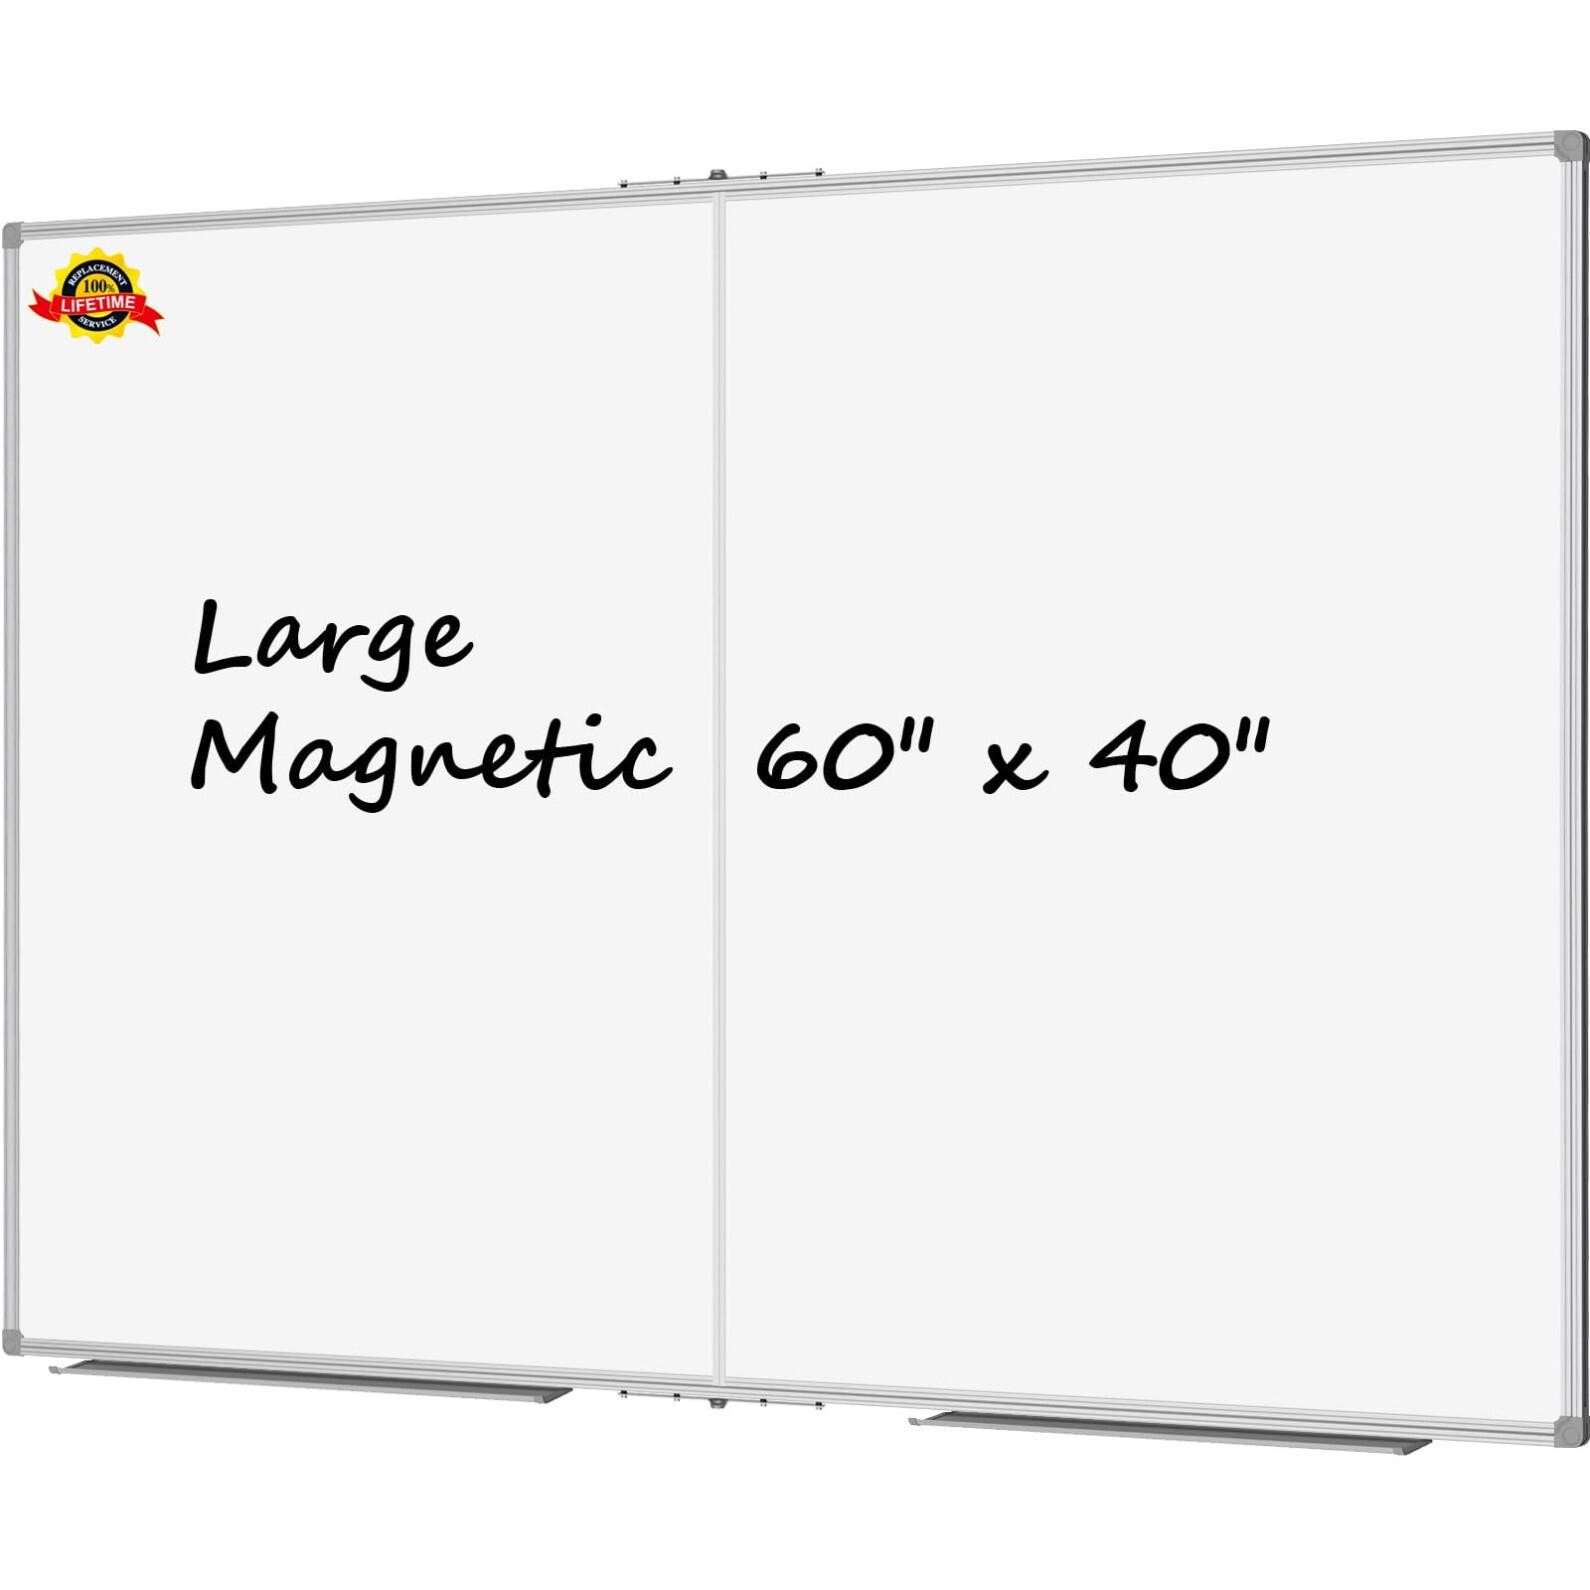 Lockways Large Magnetic 60" x 40" Dry Erase Board